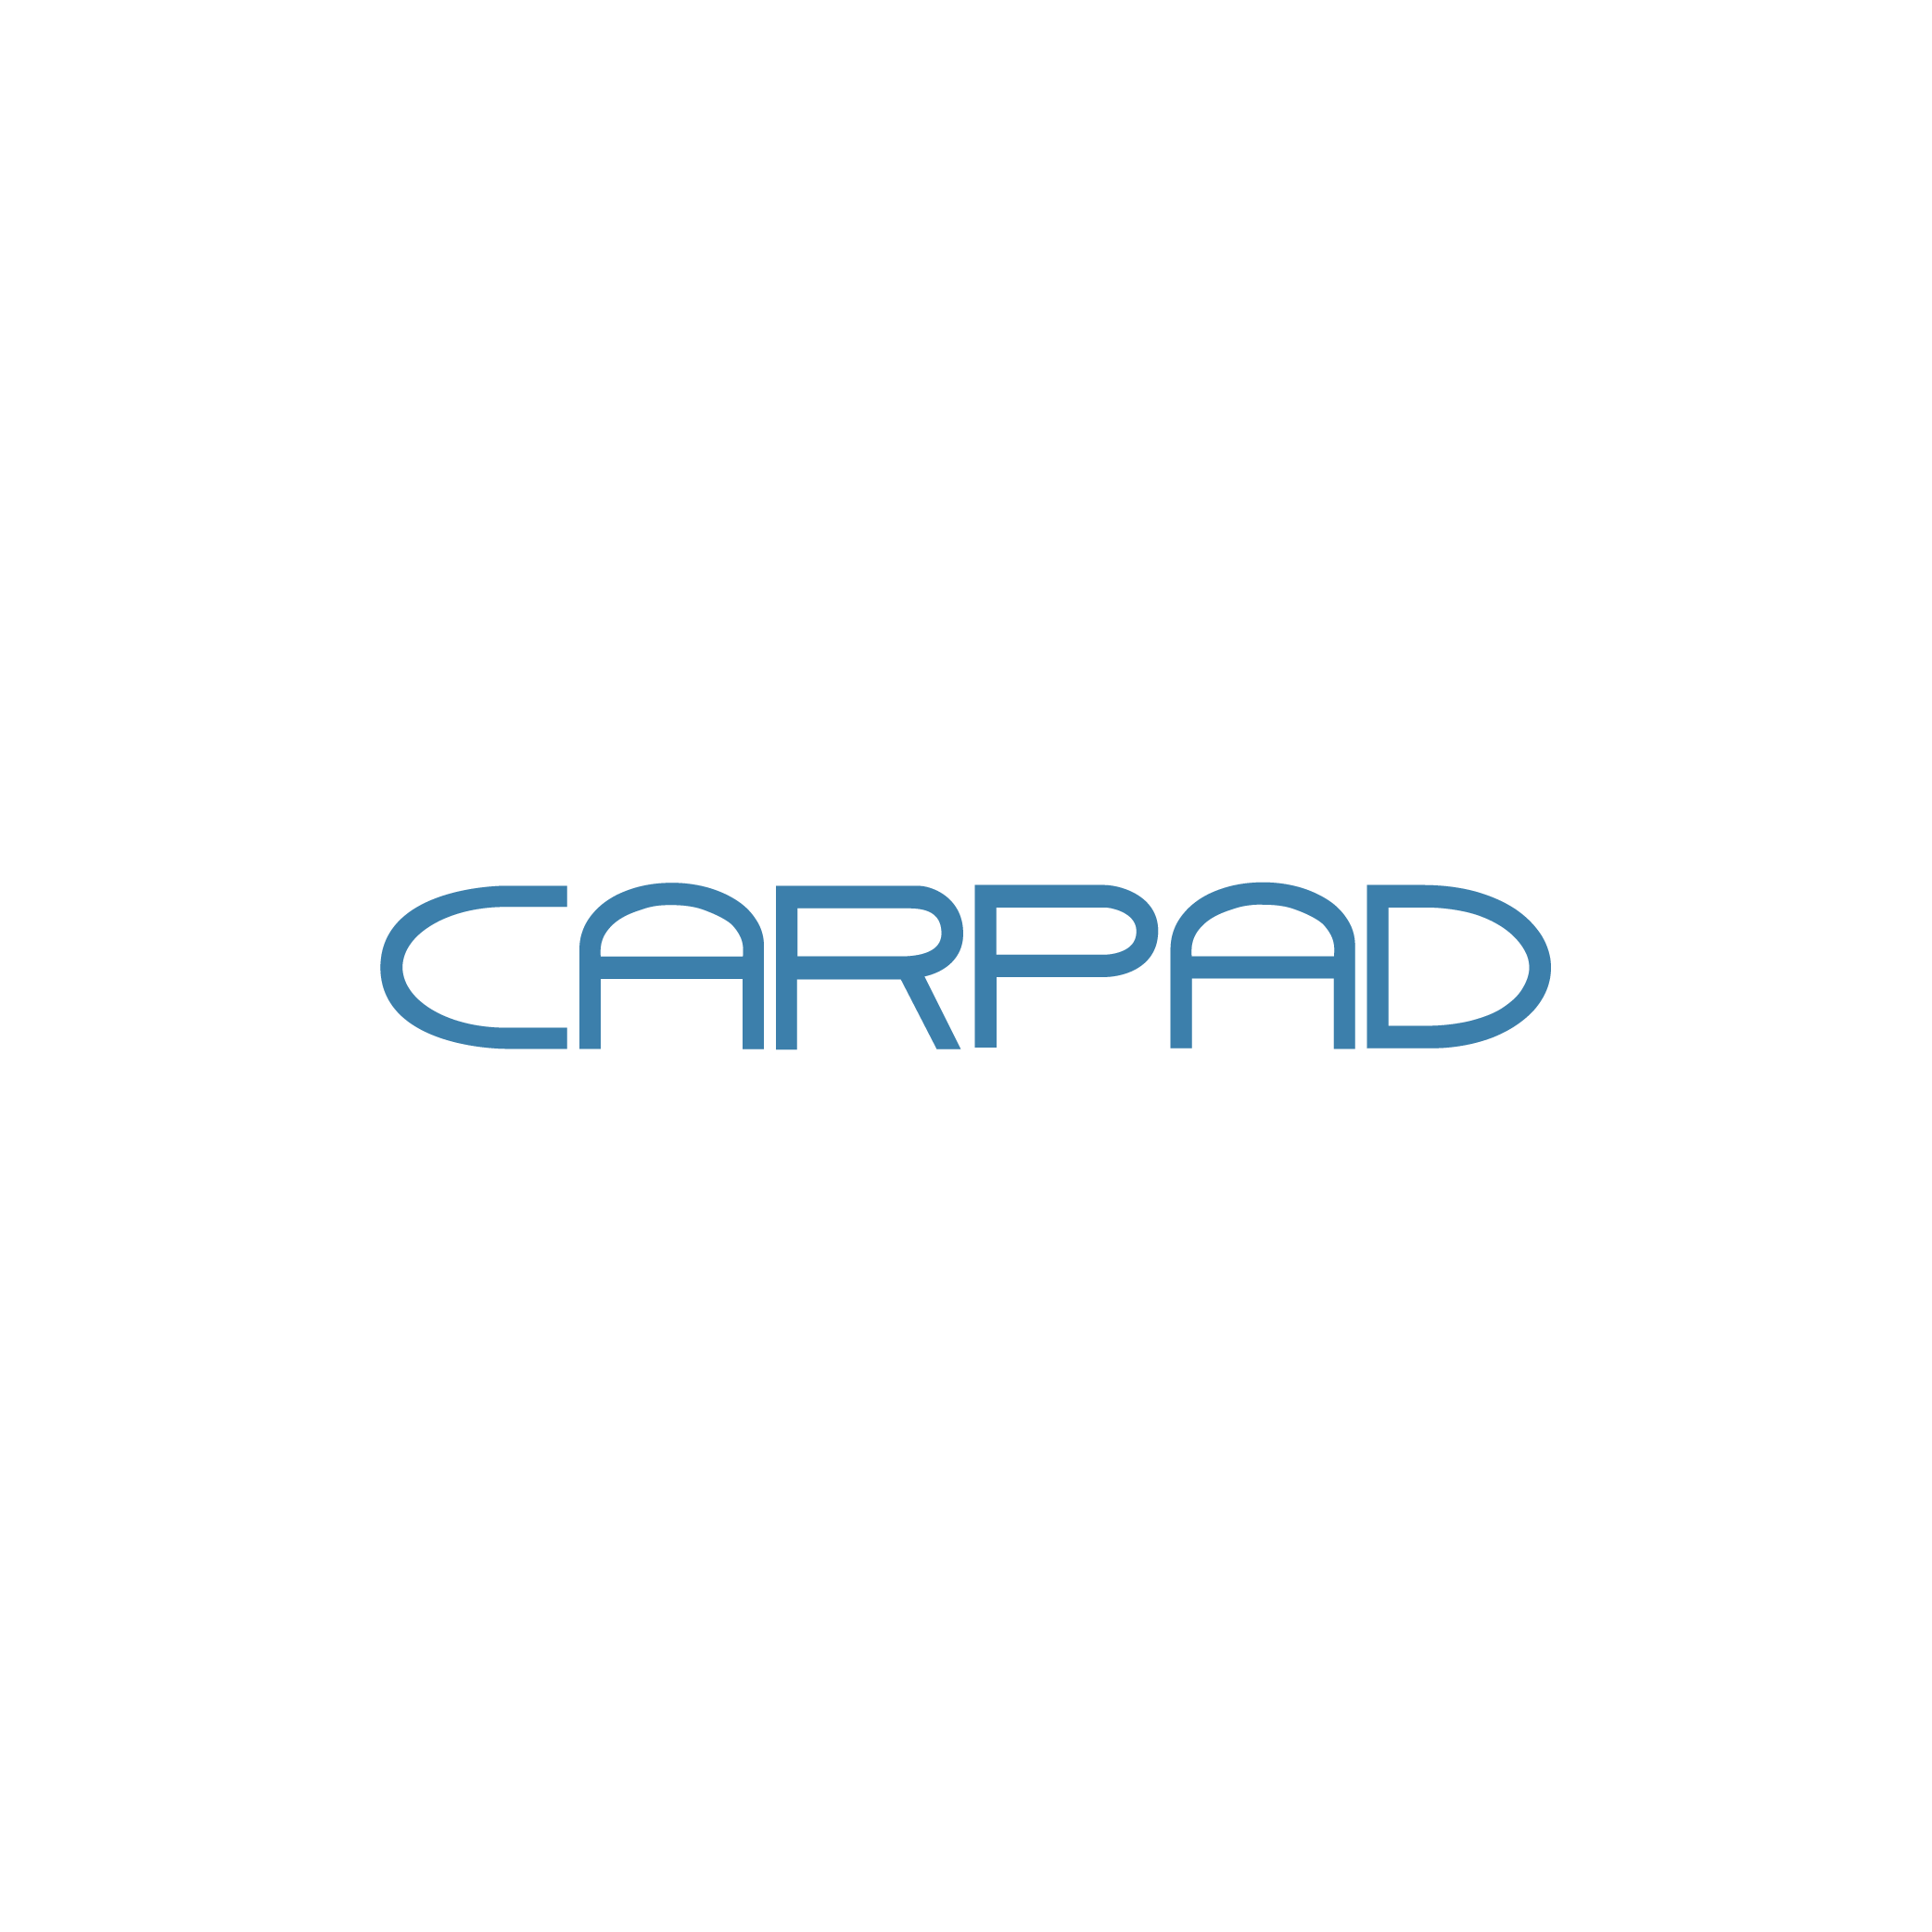 carpad-case-history